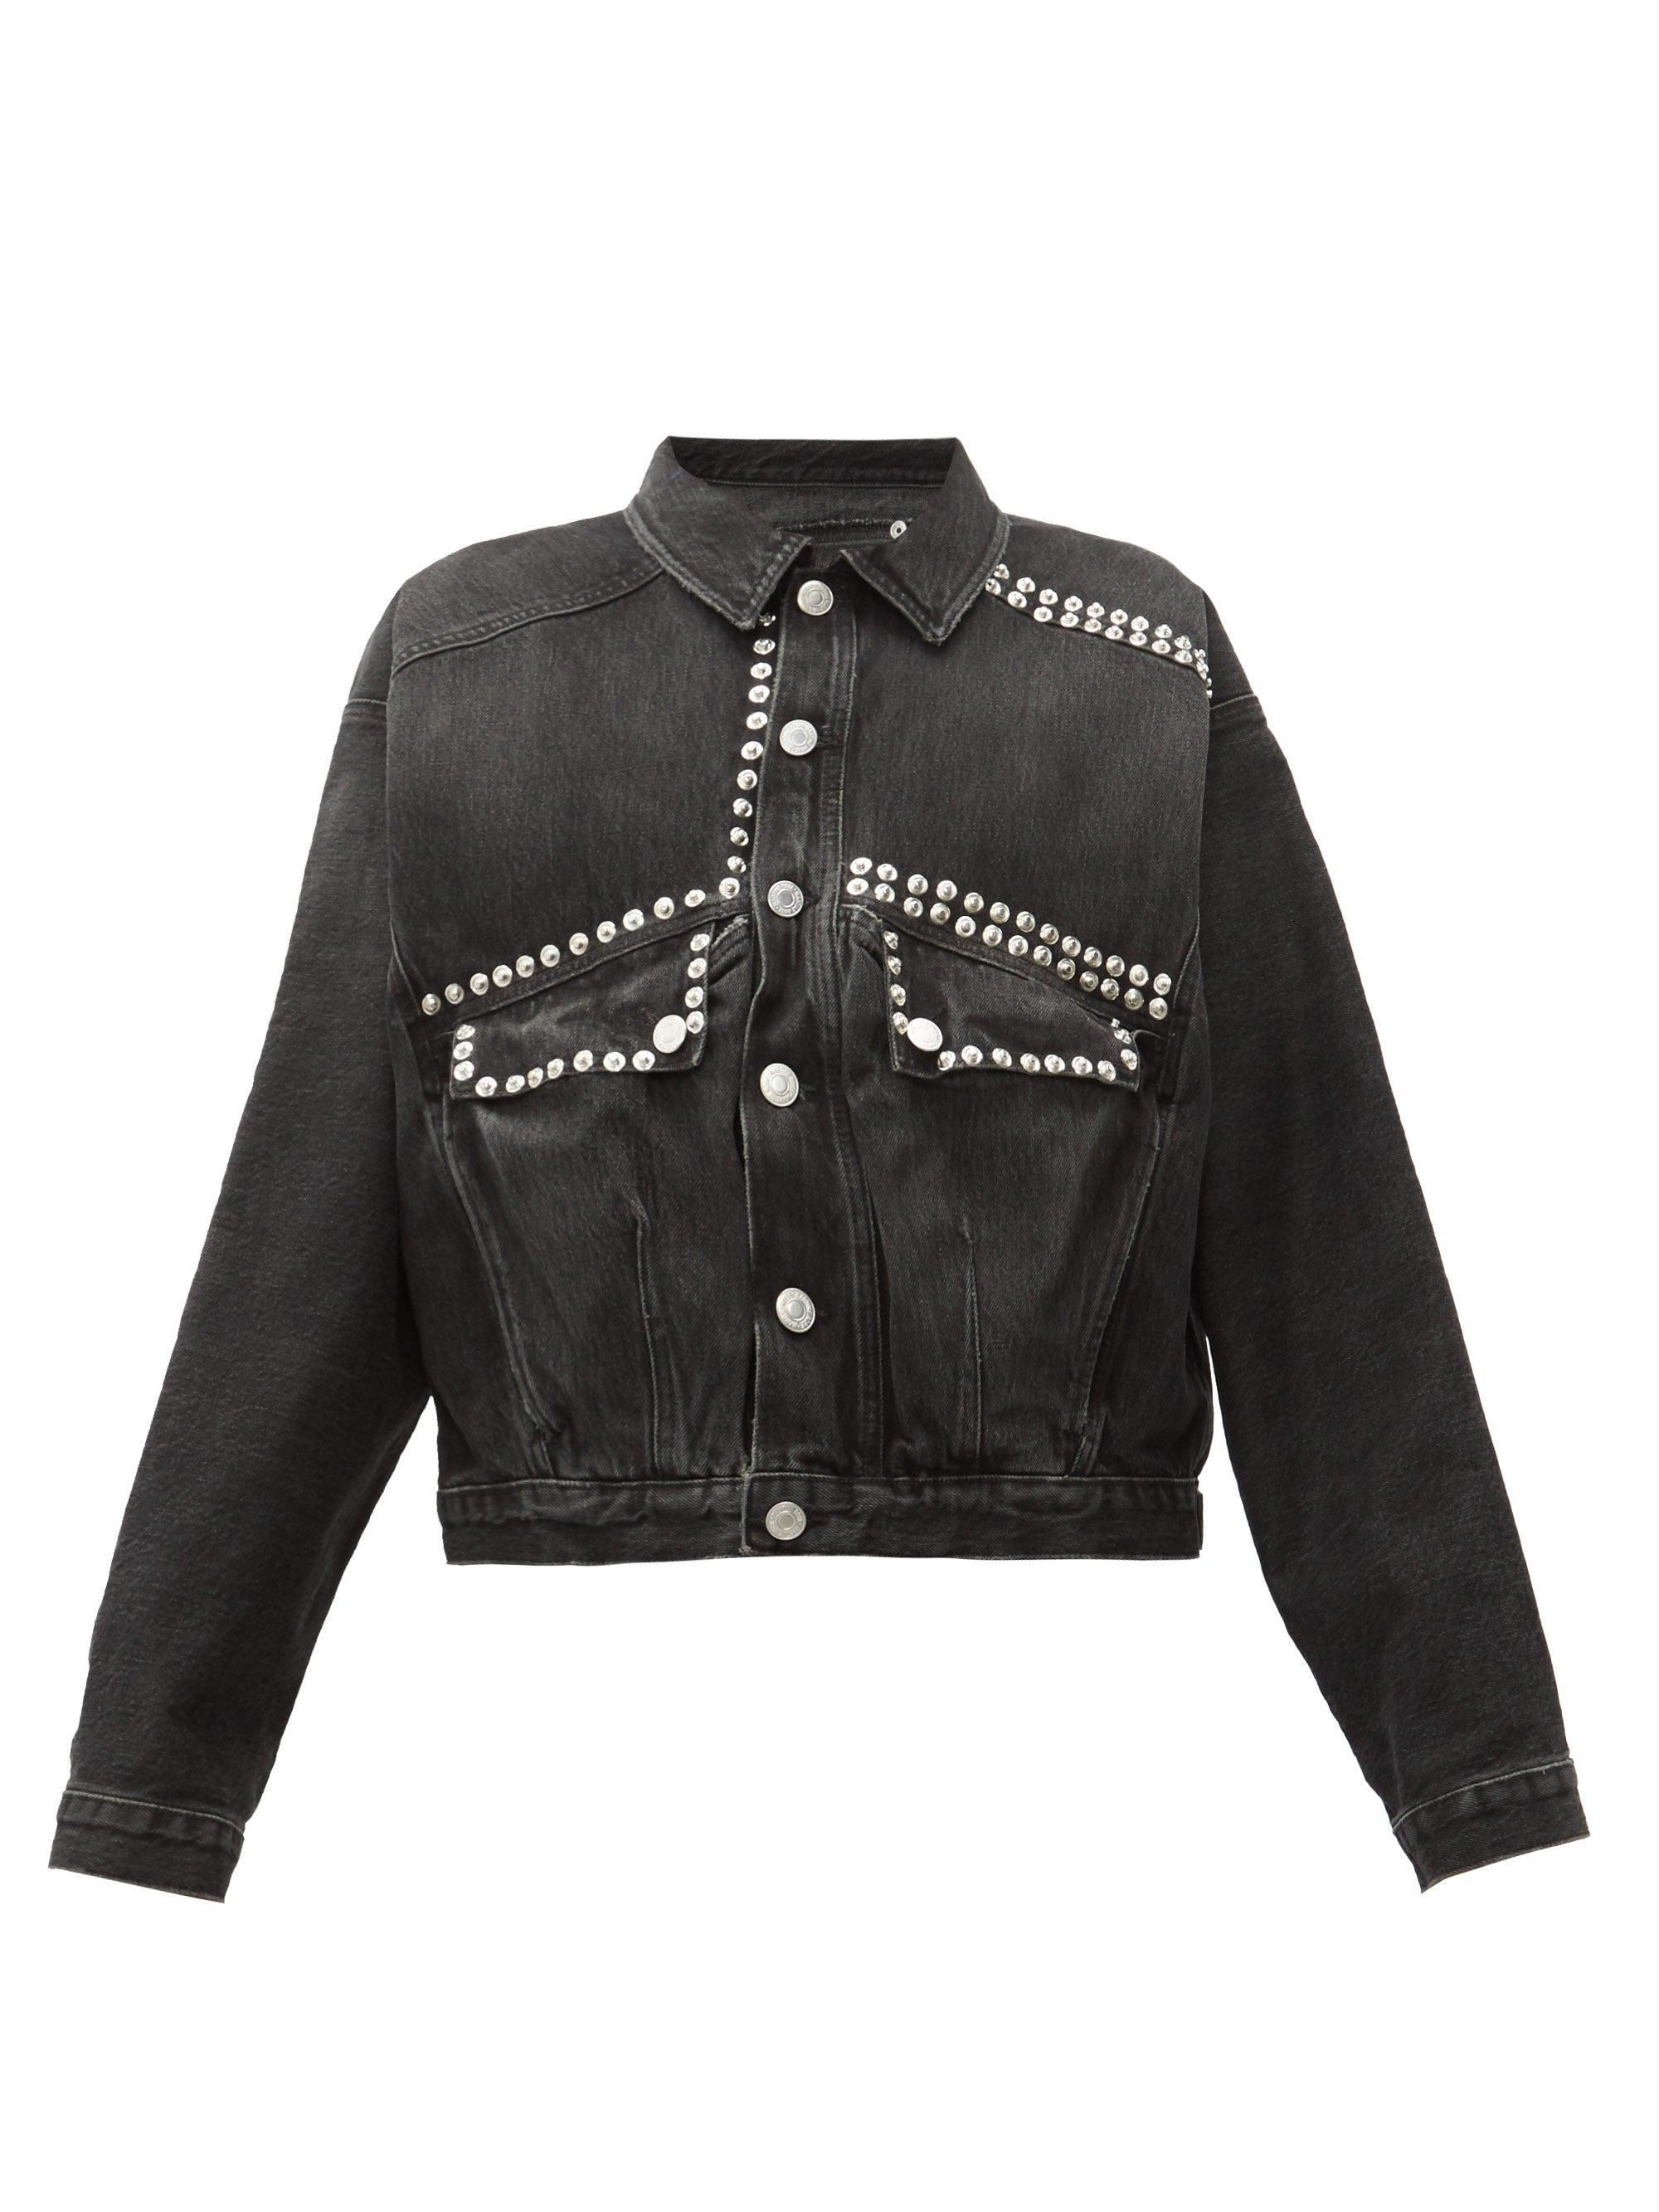 Martine Rose Studded Cotton-denim Jacket in Black - Lyst